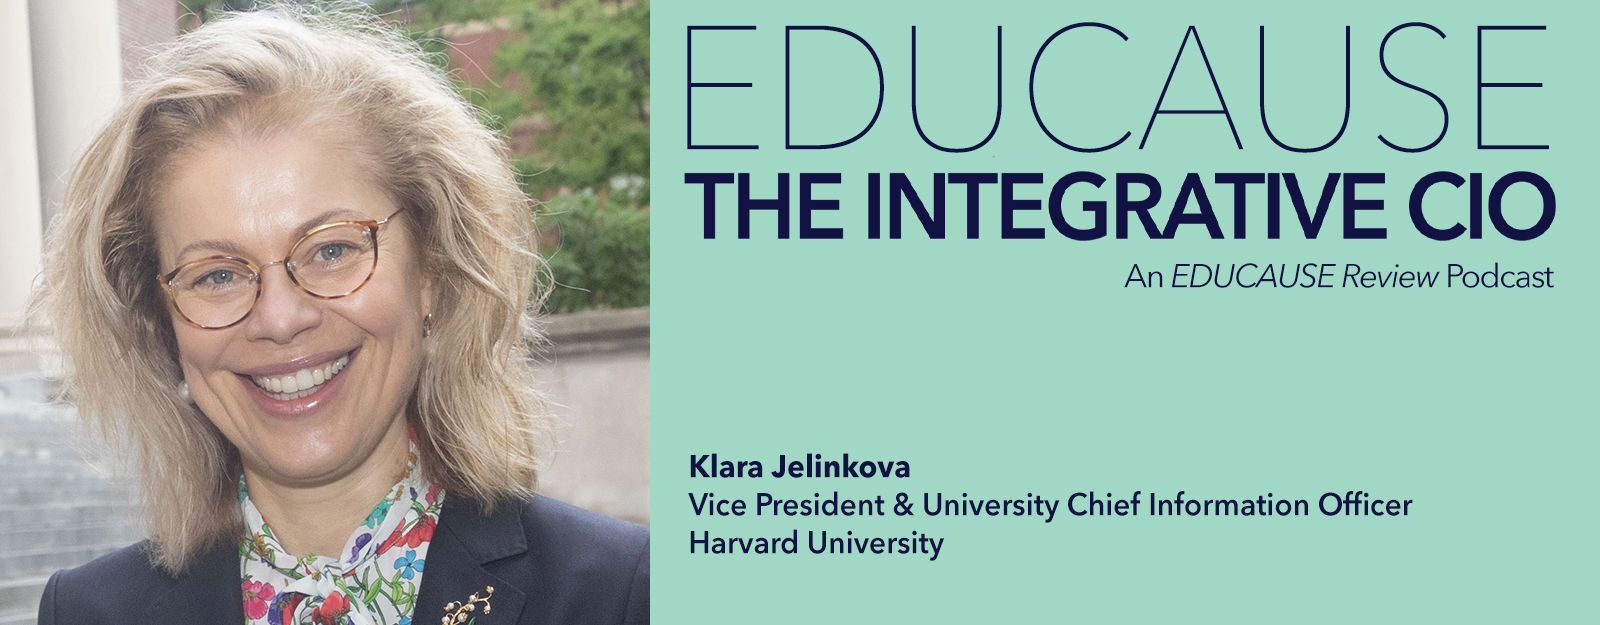 Klara Jelinkova on the Pursuit of Efficiency